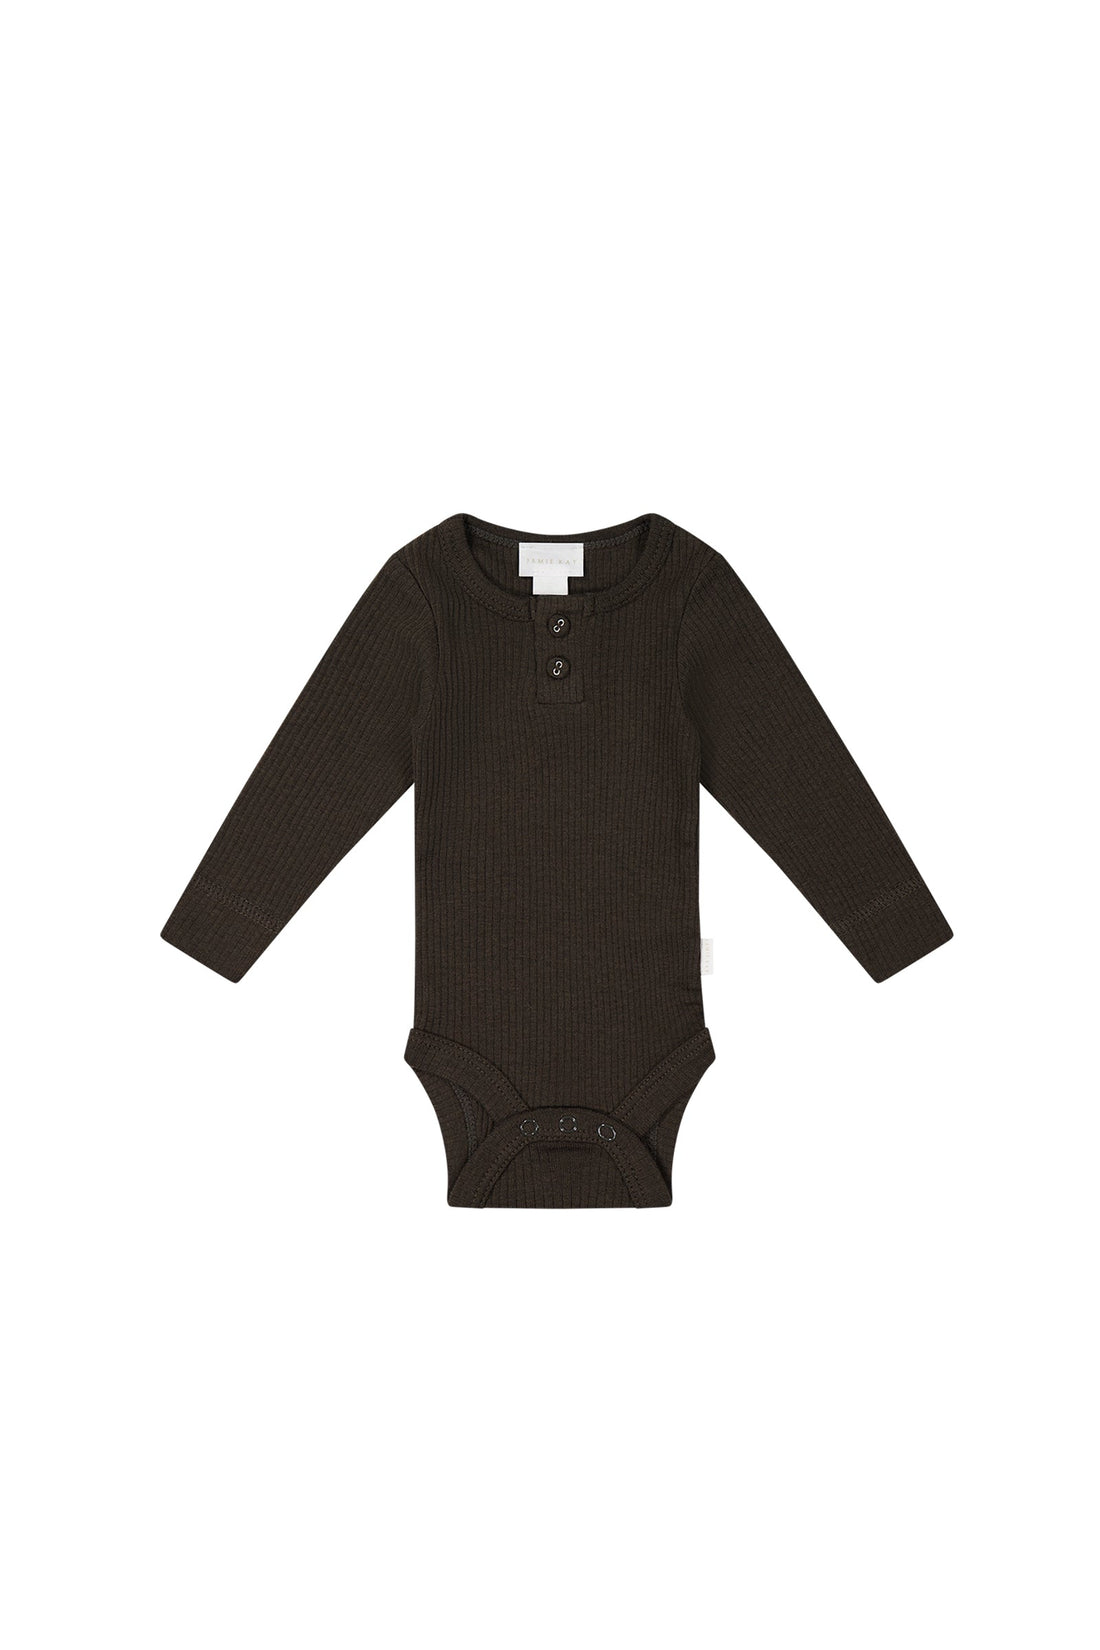 Organic Cotton Modal Long Sleeve Bodysuit - Kalamata Marle Childrens Bodysuit from Jamie Kay USA